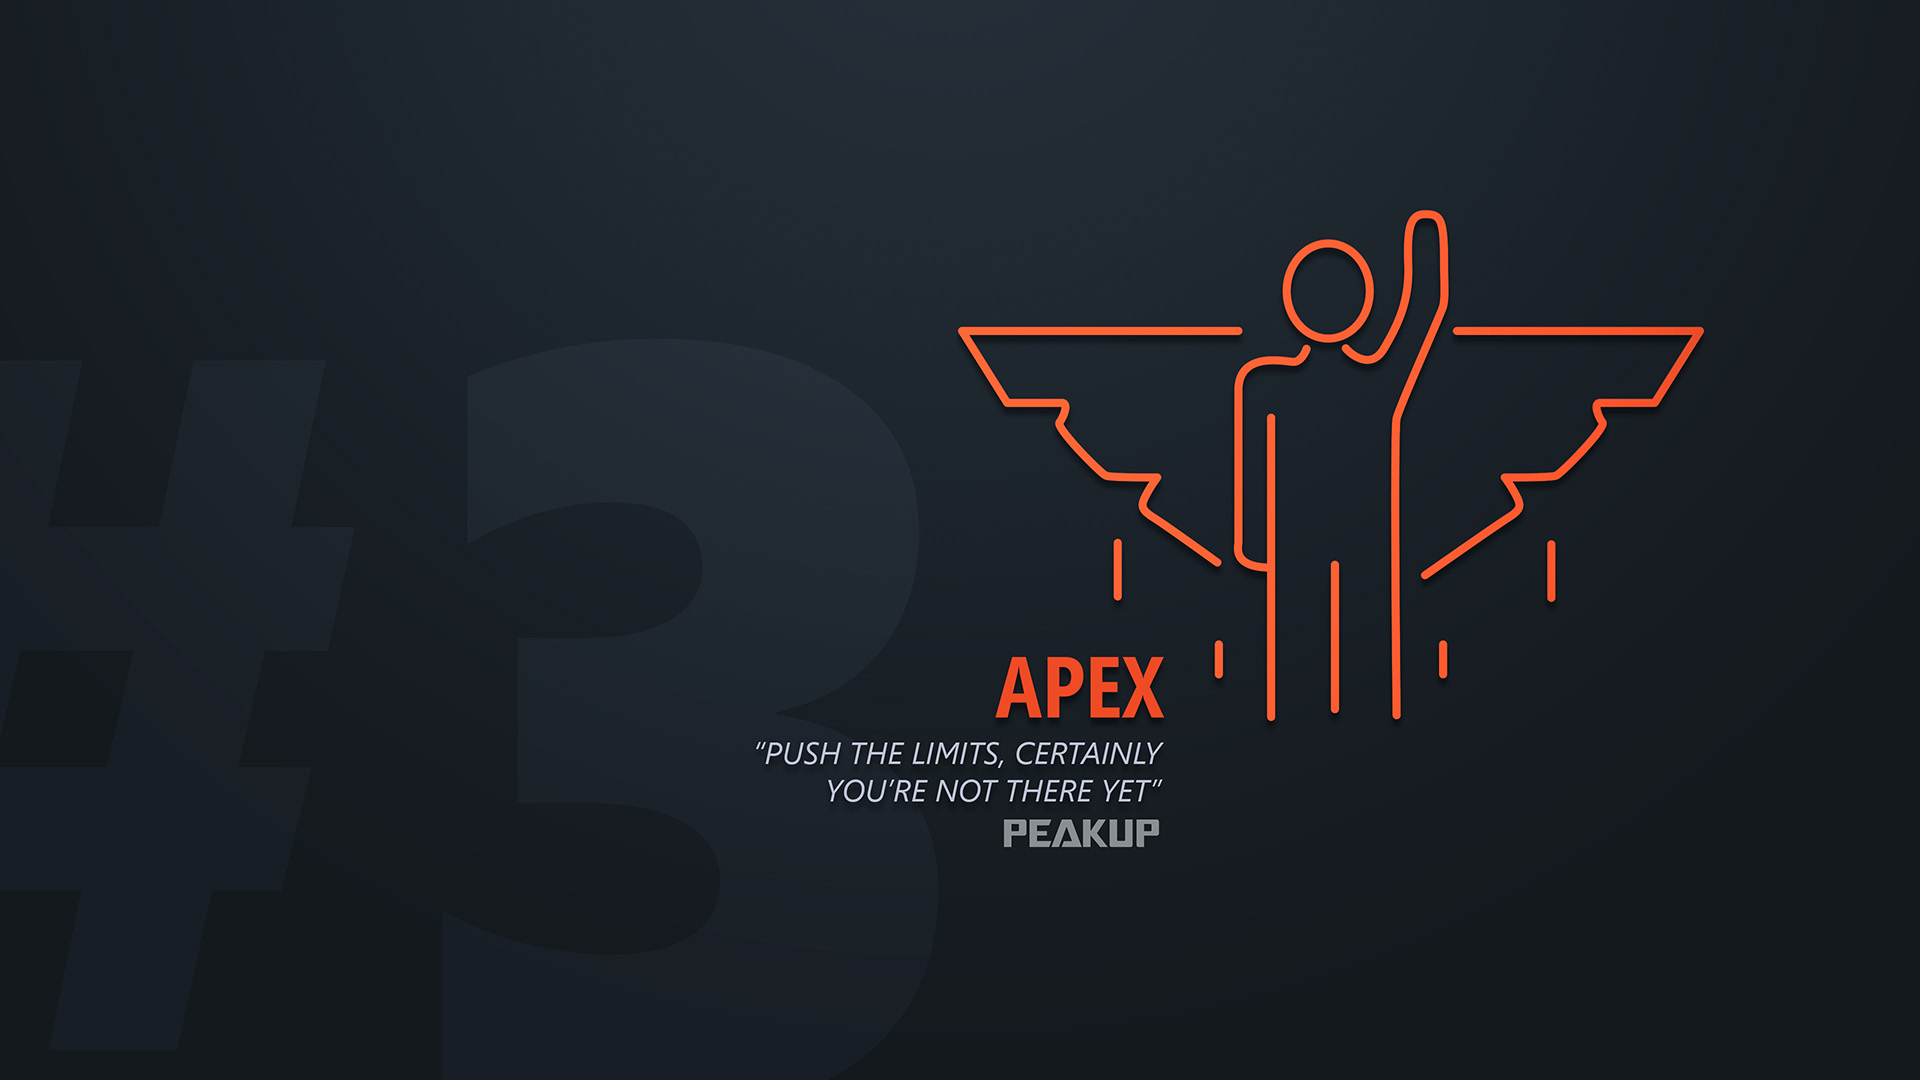 apex.jpg